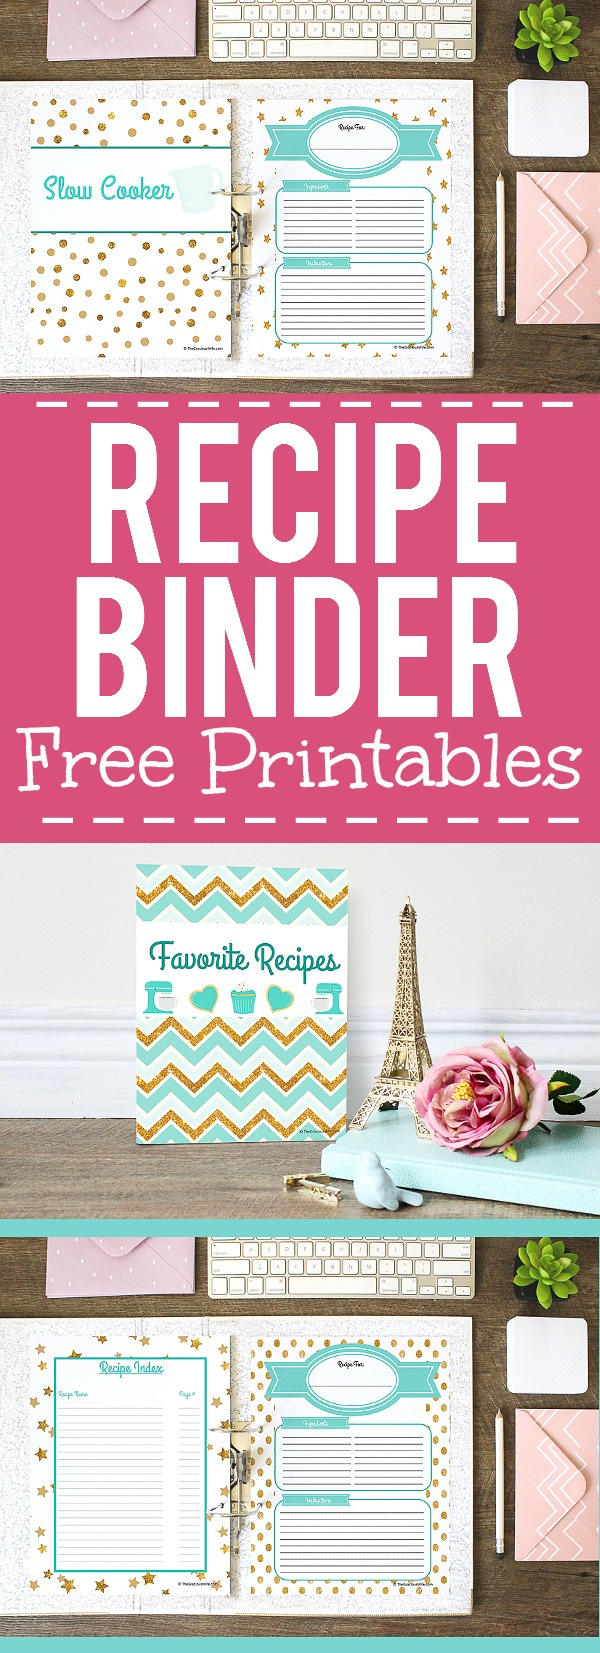 How To Make A Recipe Binder | Free Recipe Binder Printables - Free Printable Recipe Binder